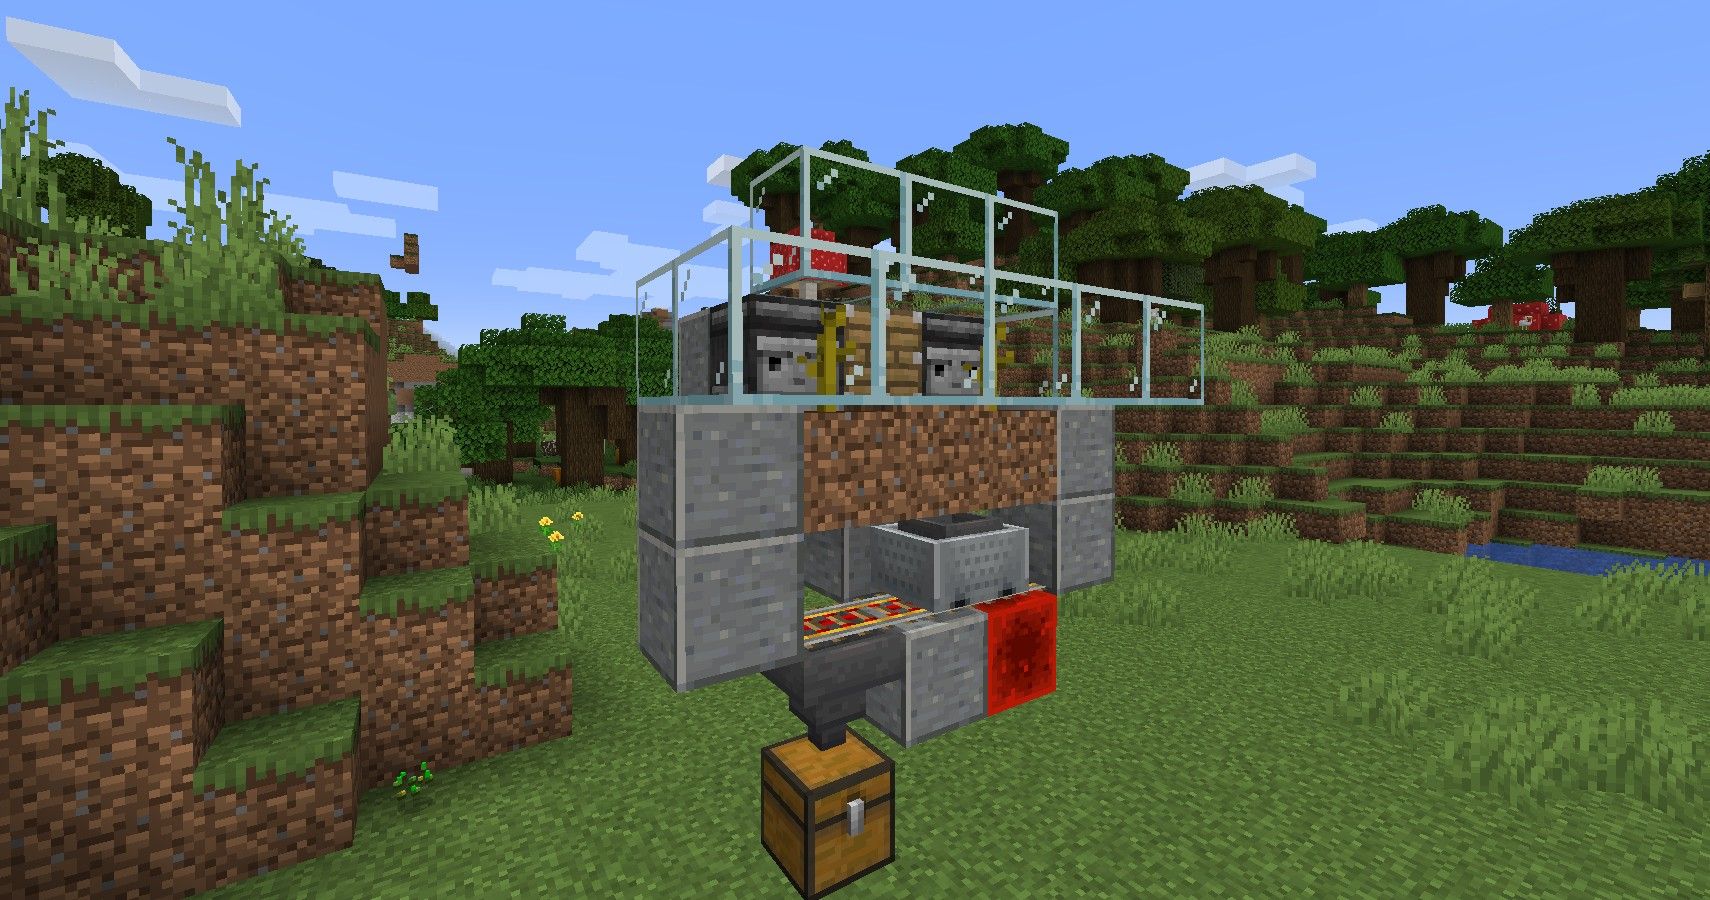 Minecraft Automatic melon and pumpkin farm complete